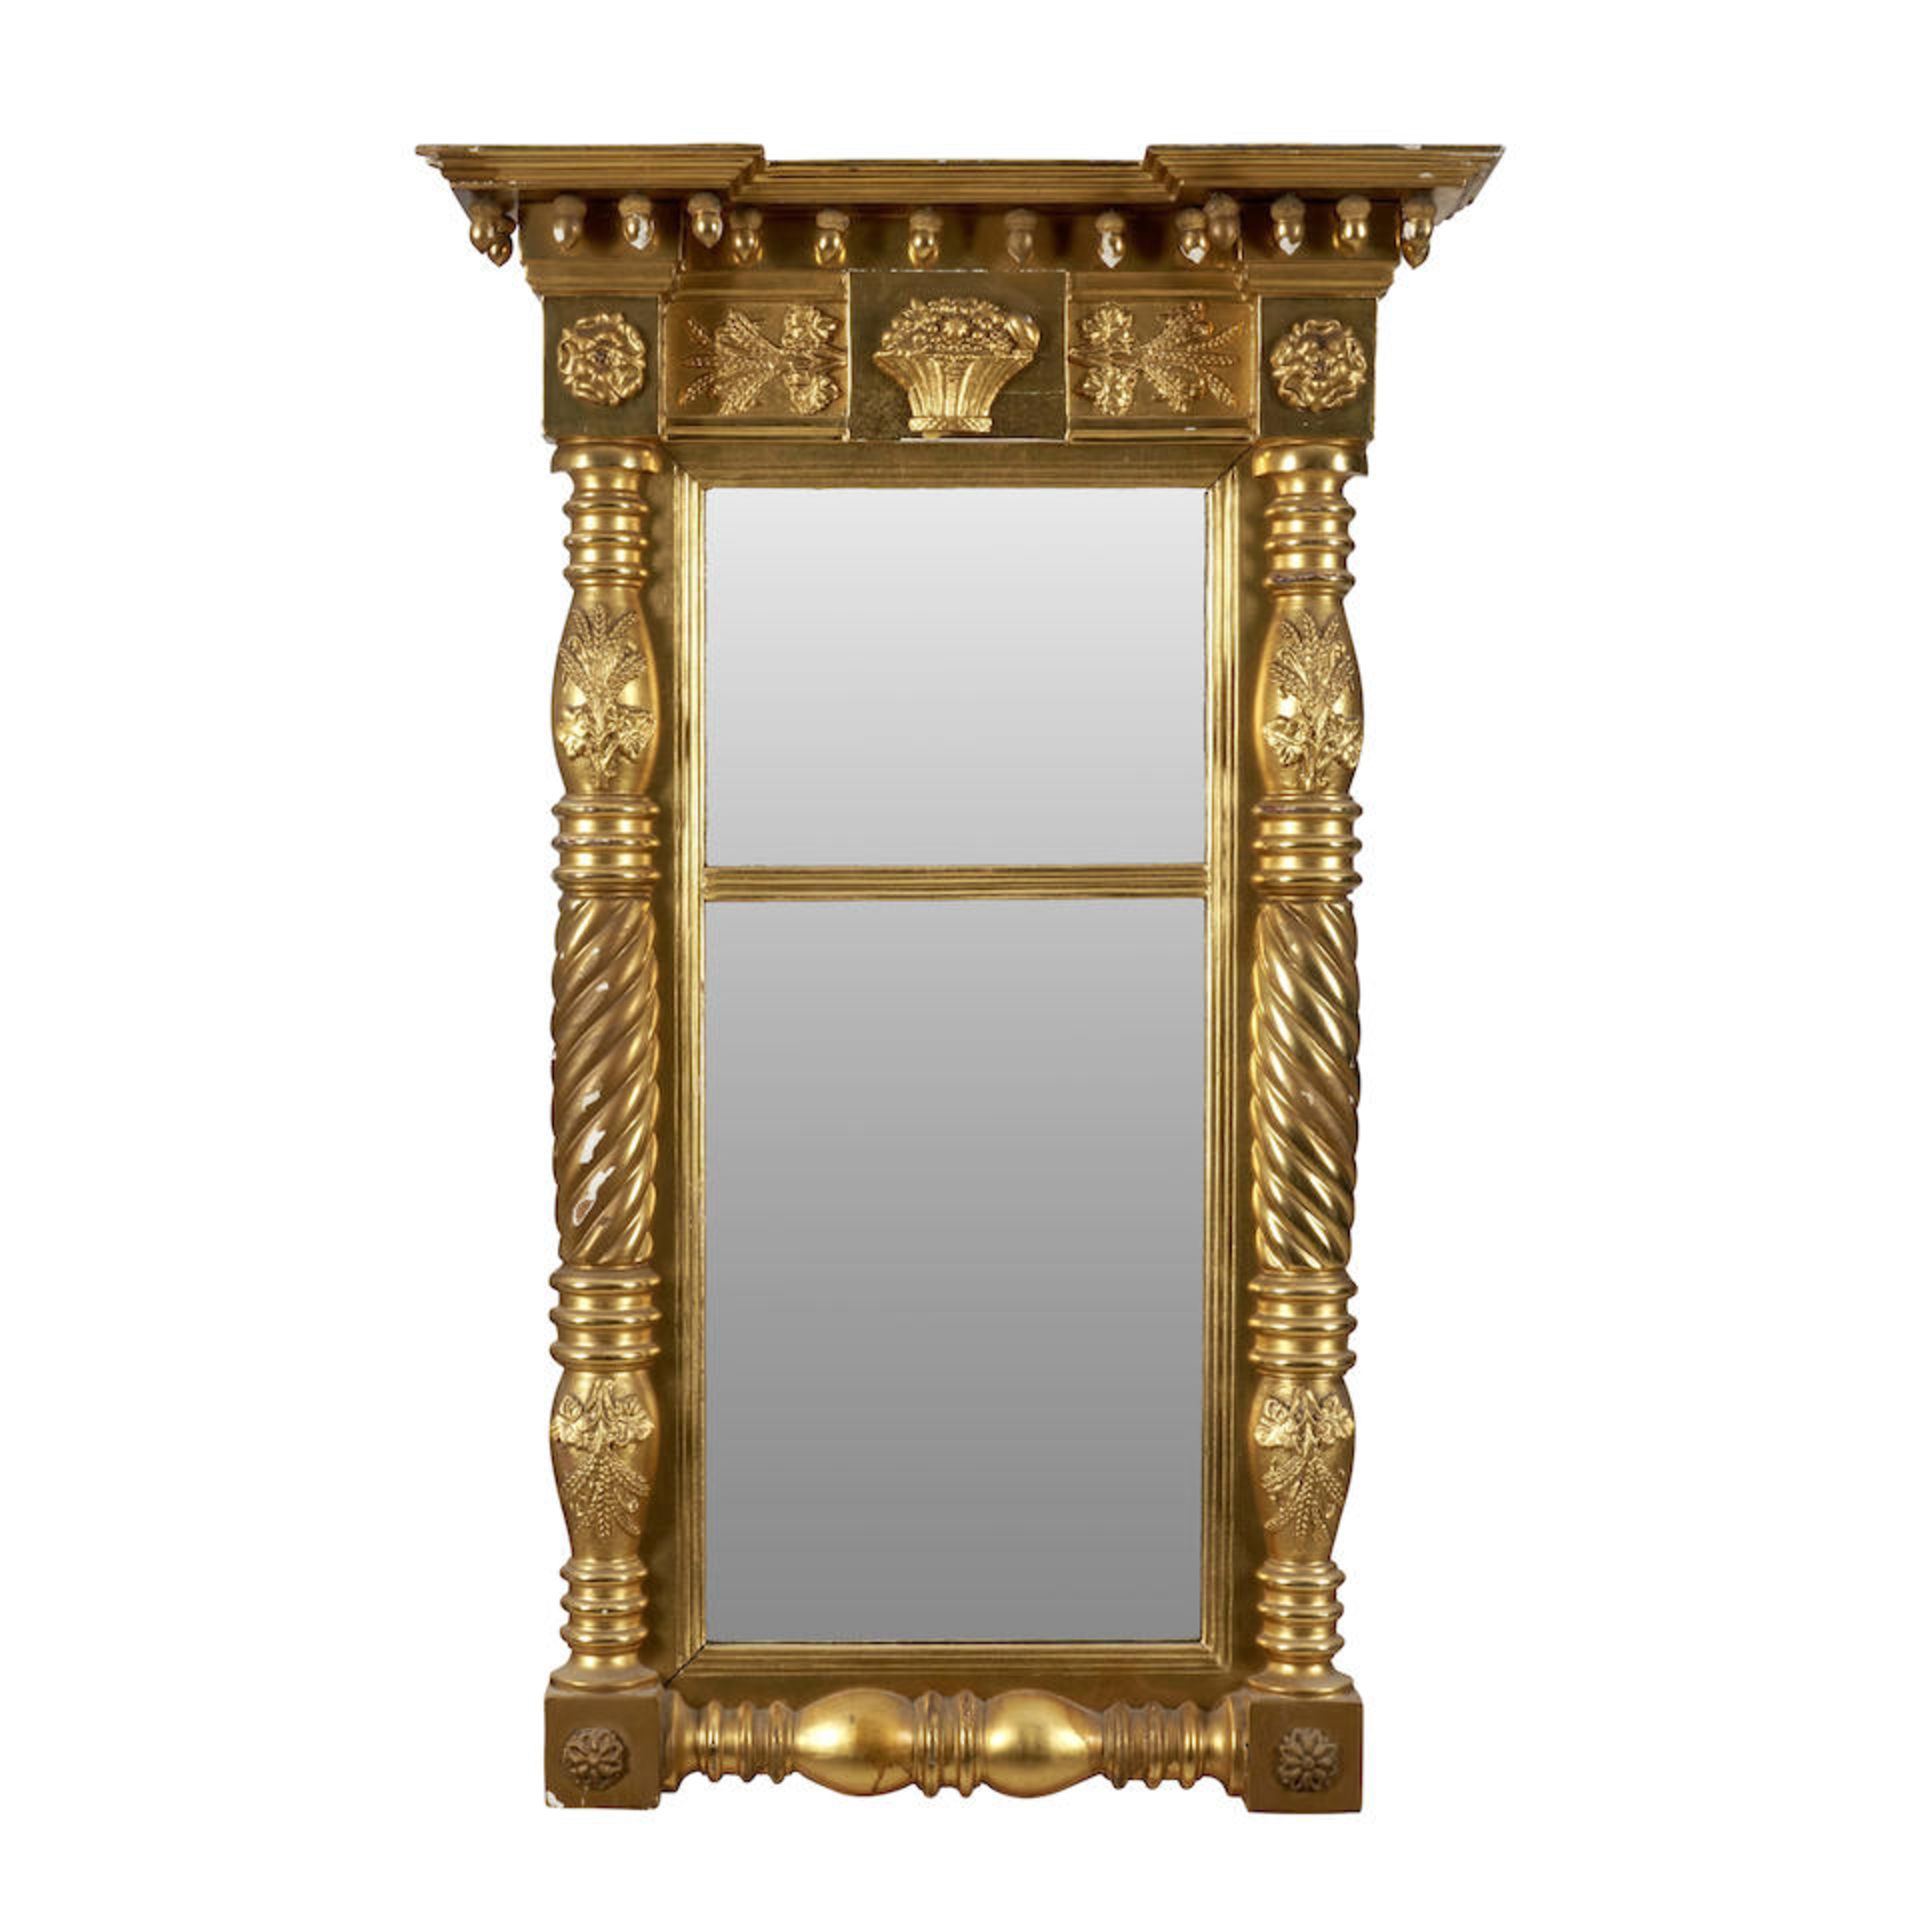 Empire-style Split-baluster Mirror, Ernest F. Hagen (1830-1913), New York, New York, c. 1870.